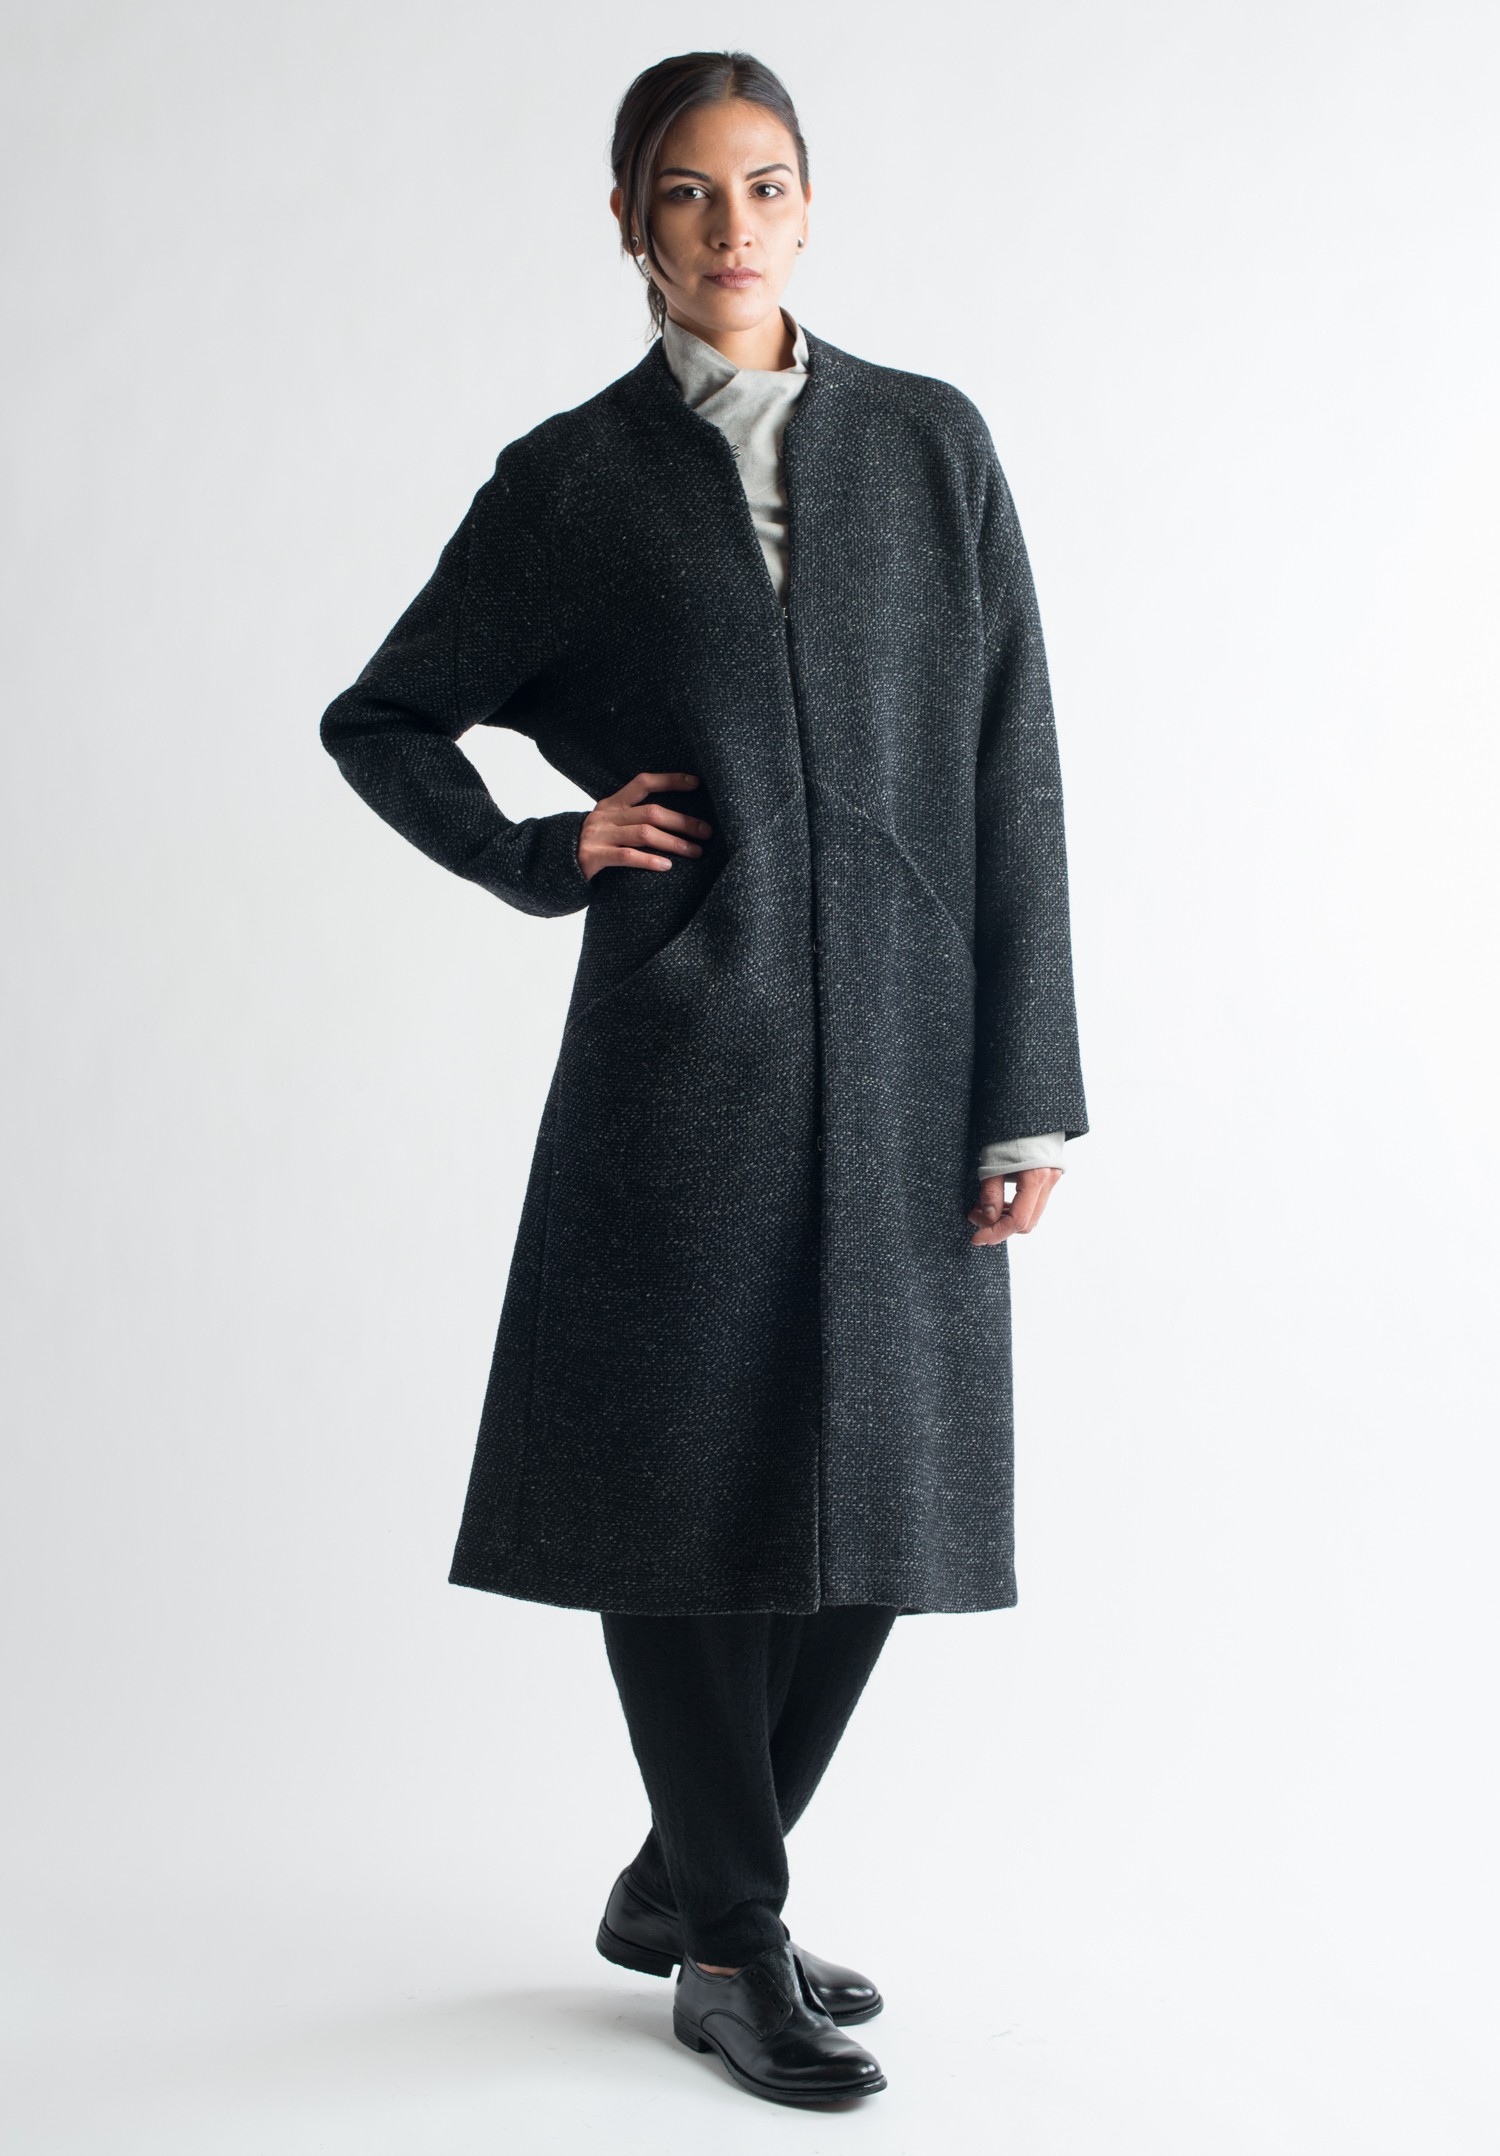 Inaisce Woven Wool Coat in Grey/Black | Santa Fe Dry Goods Trippen ...